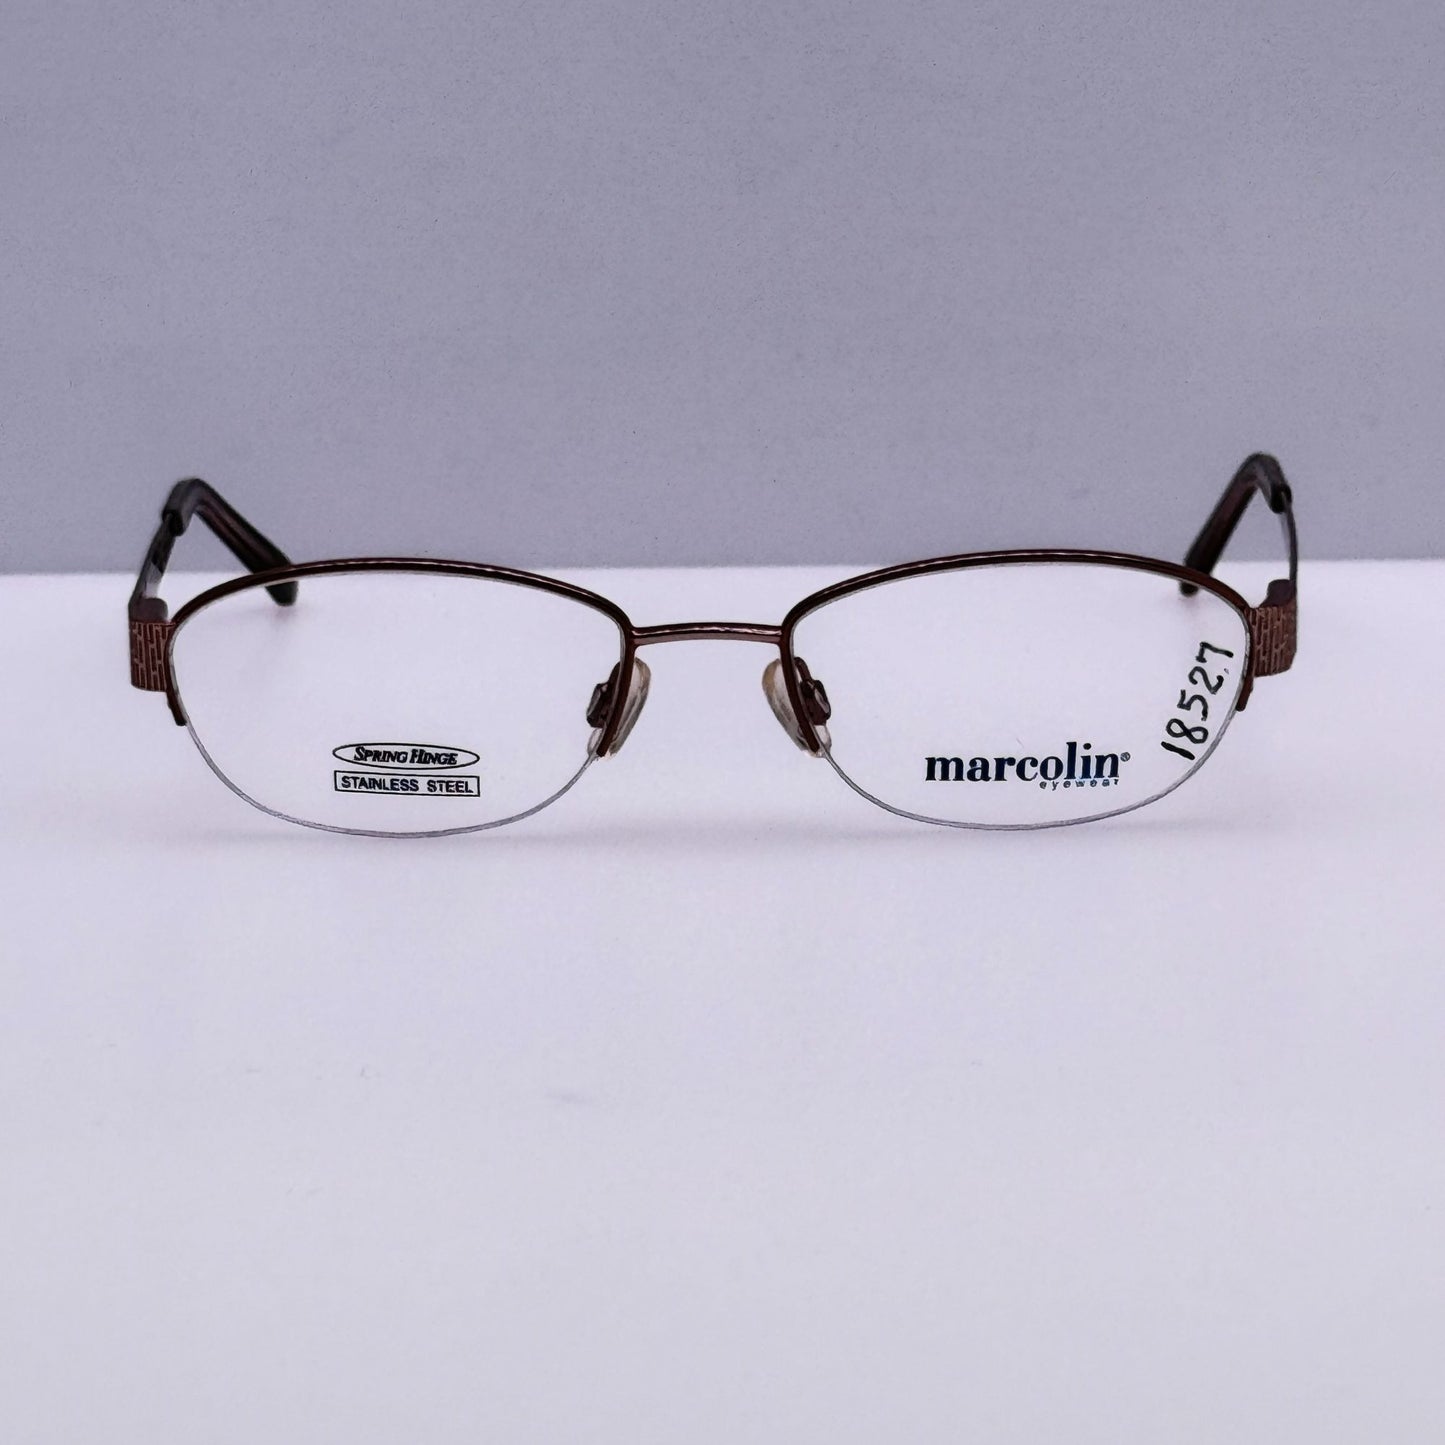 Marcolin Eyeglasses Eye Glasses Frames MA 7302 Col. 045 51-18-135